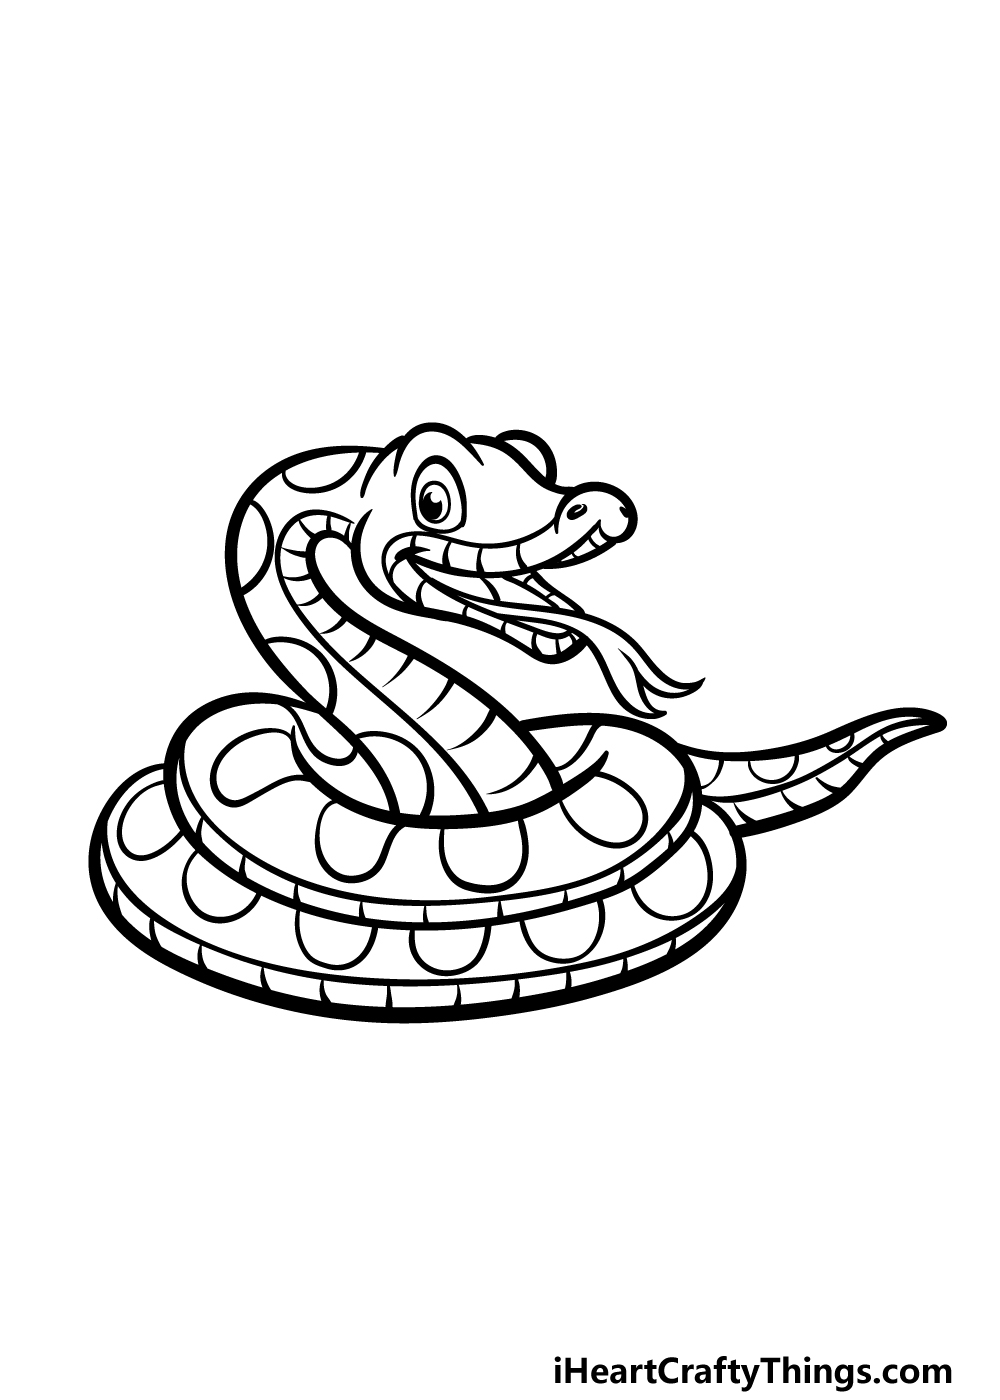 how to draw a cartoon snake step 5